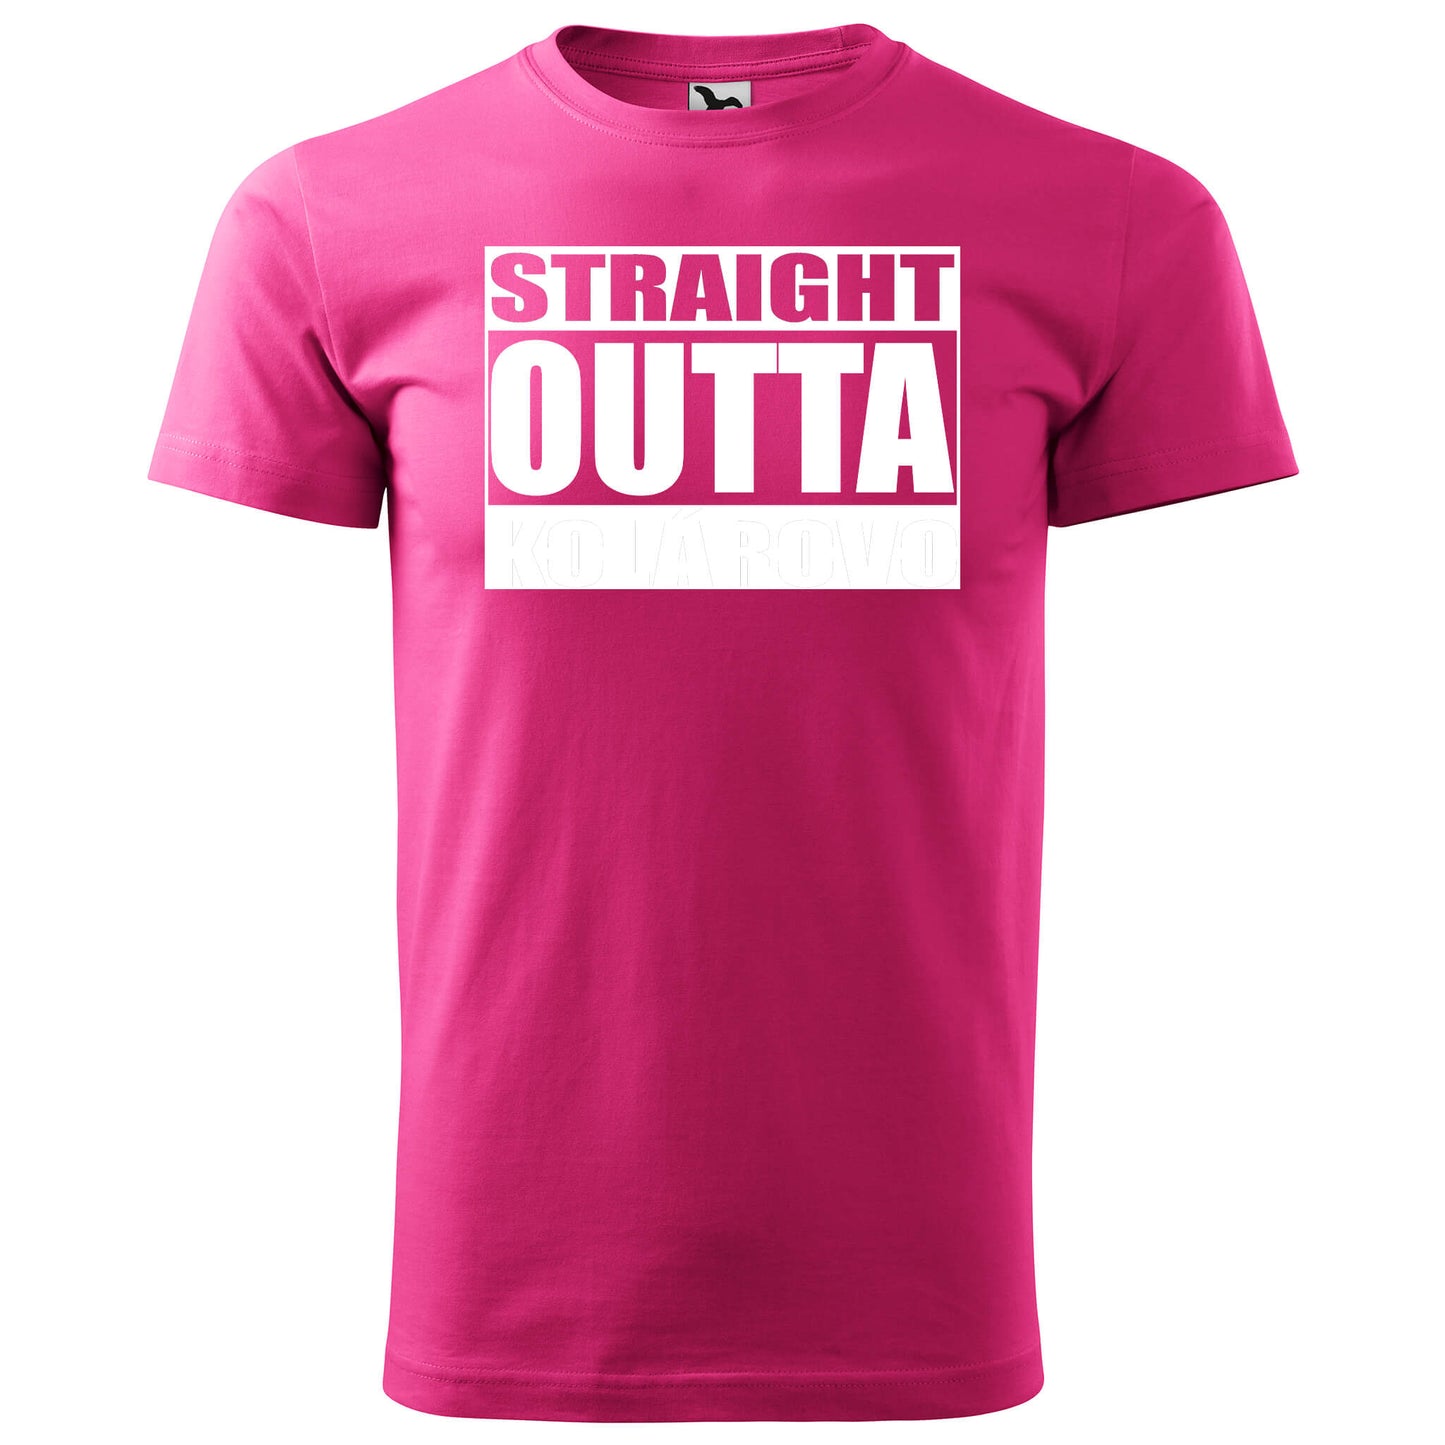 T-shirt - Straight outta Kolárovo - Customizable - rvdesignprint